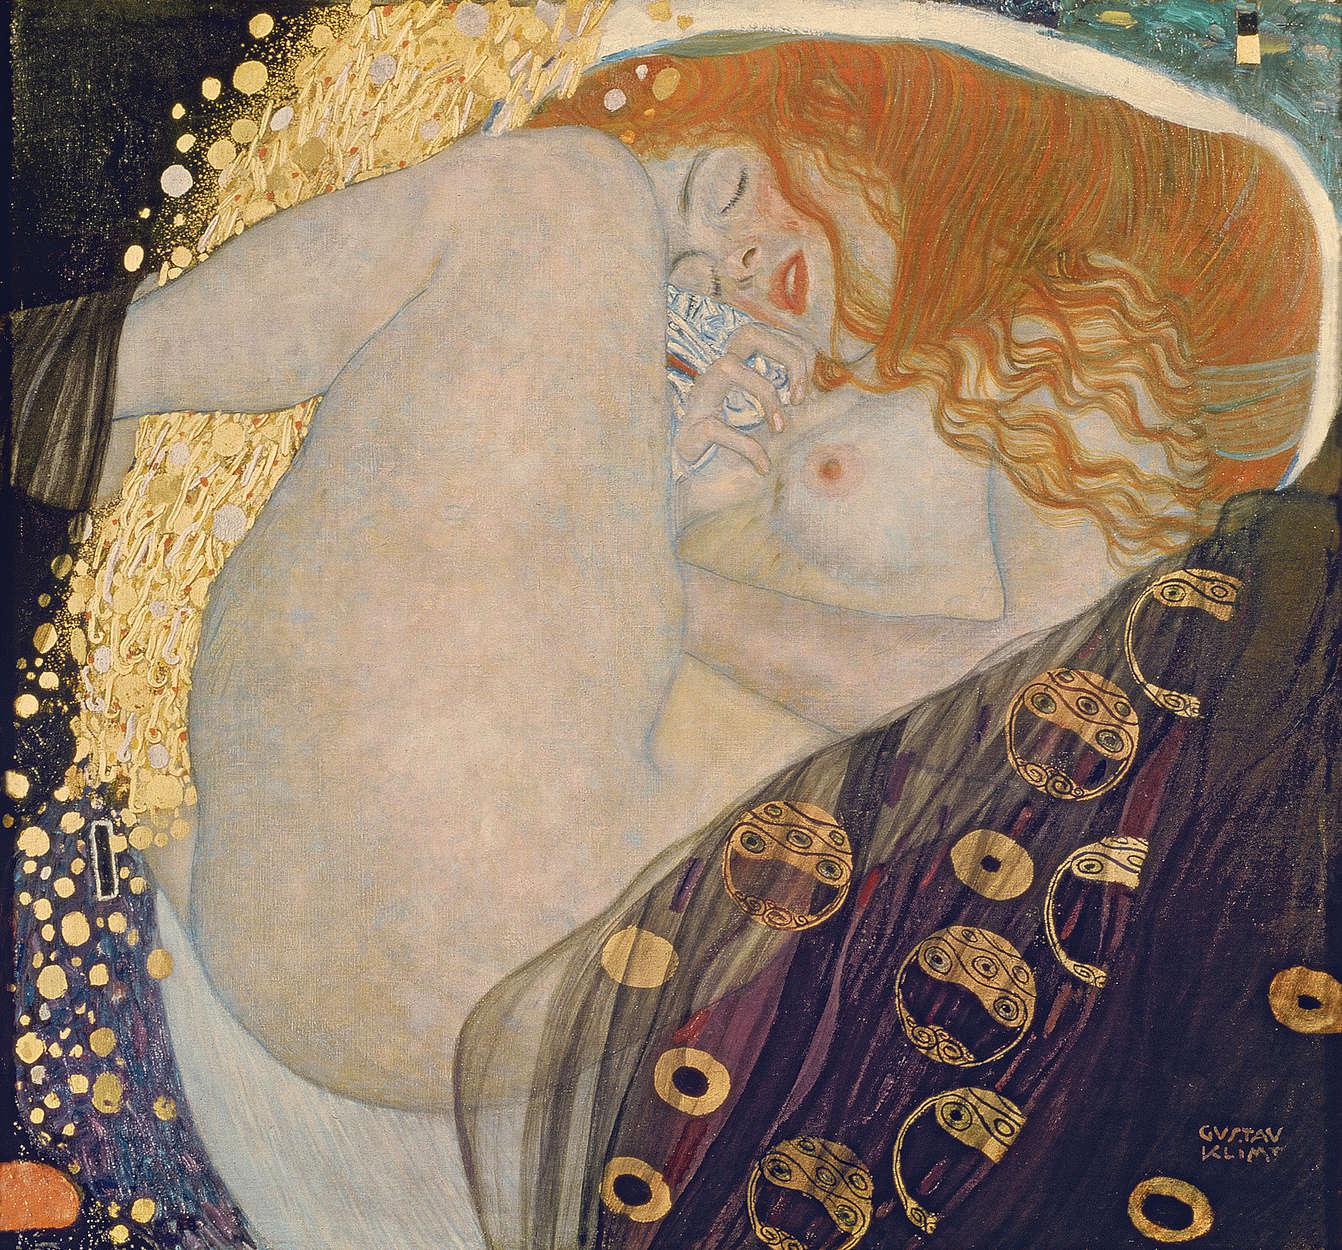             Fotomurali "Danae" di Gustav Klimt
        